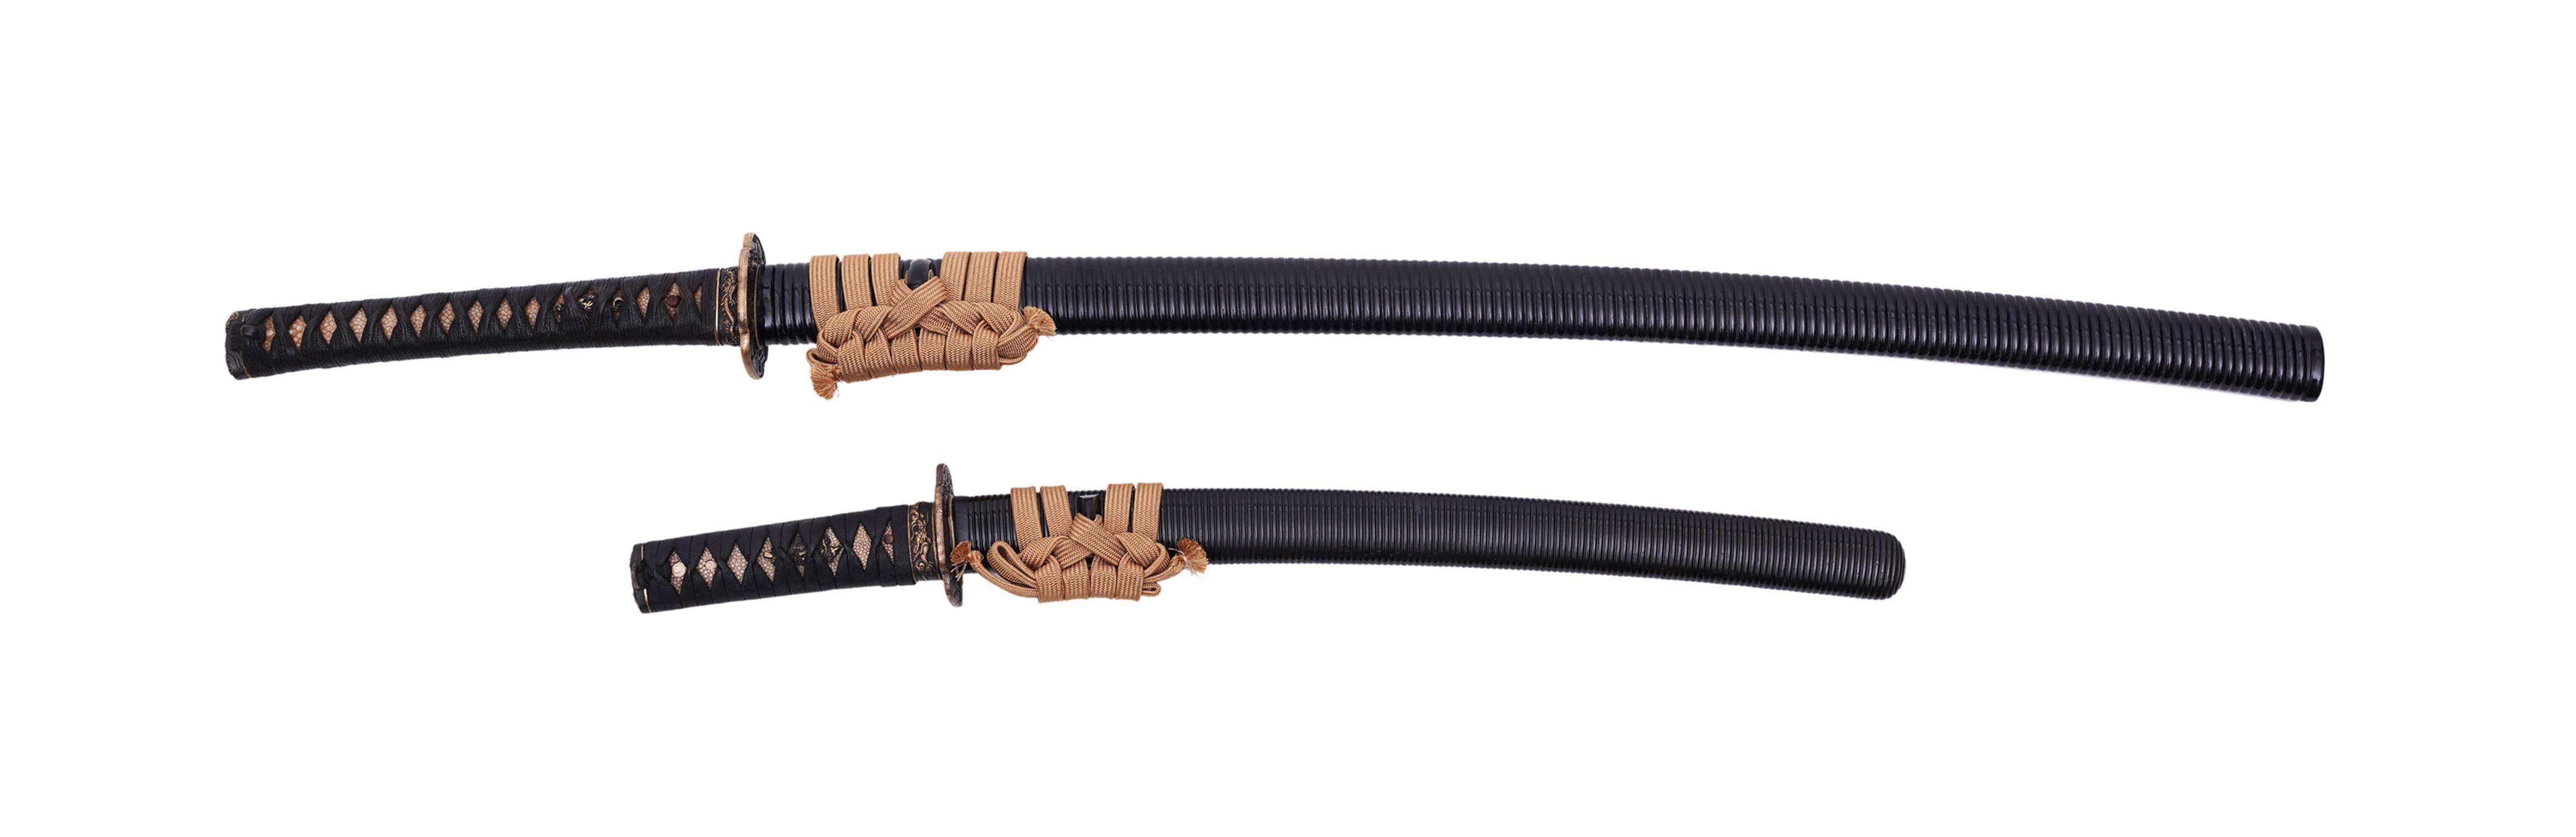 .A PAIR OF SAMURAI SWORDS, DAISHO Japan 1. Description of the katana: The katana is Shinto according - Image 2 of 24